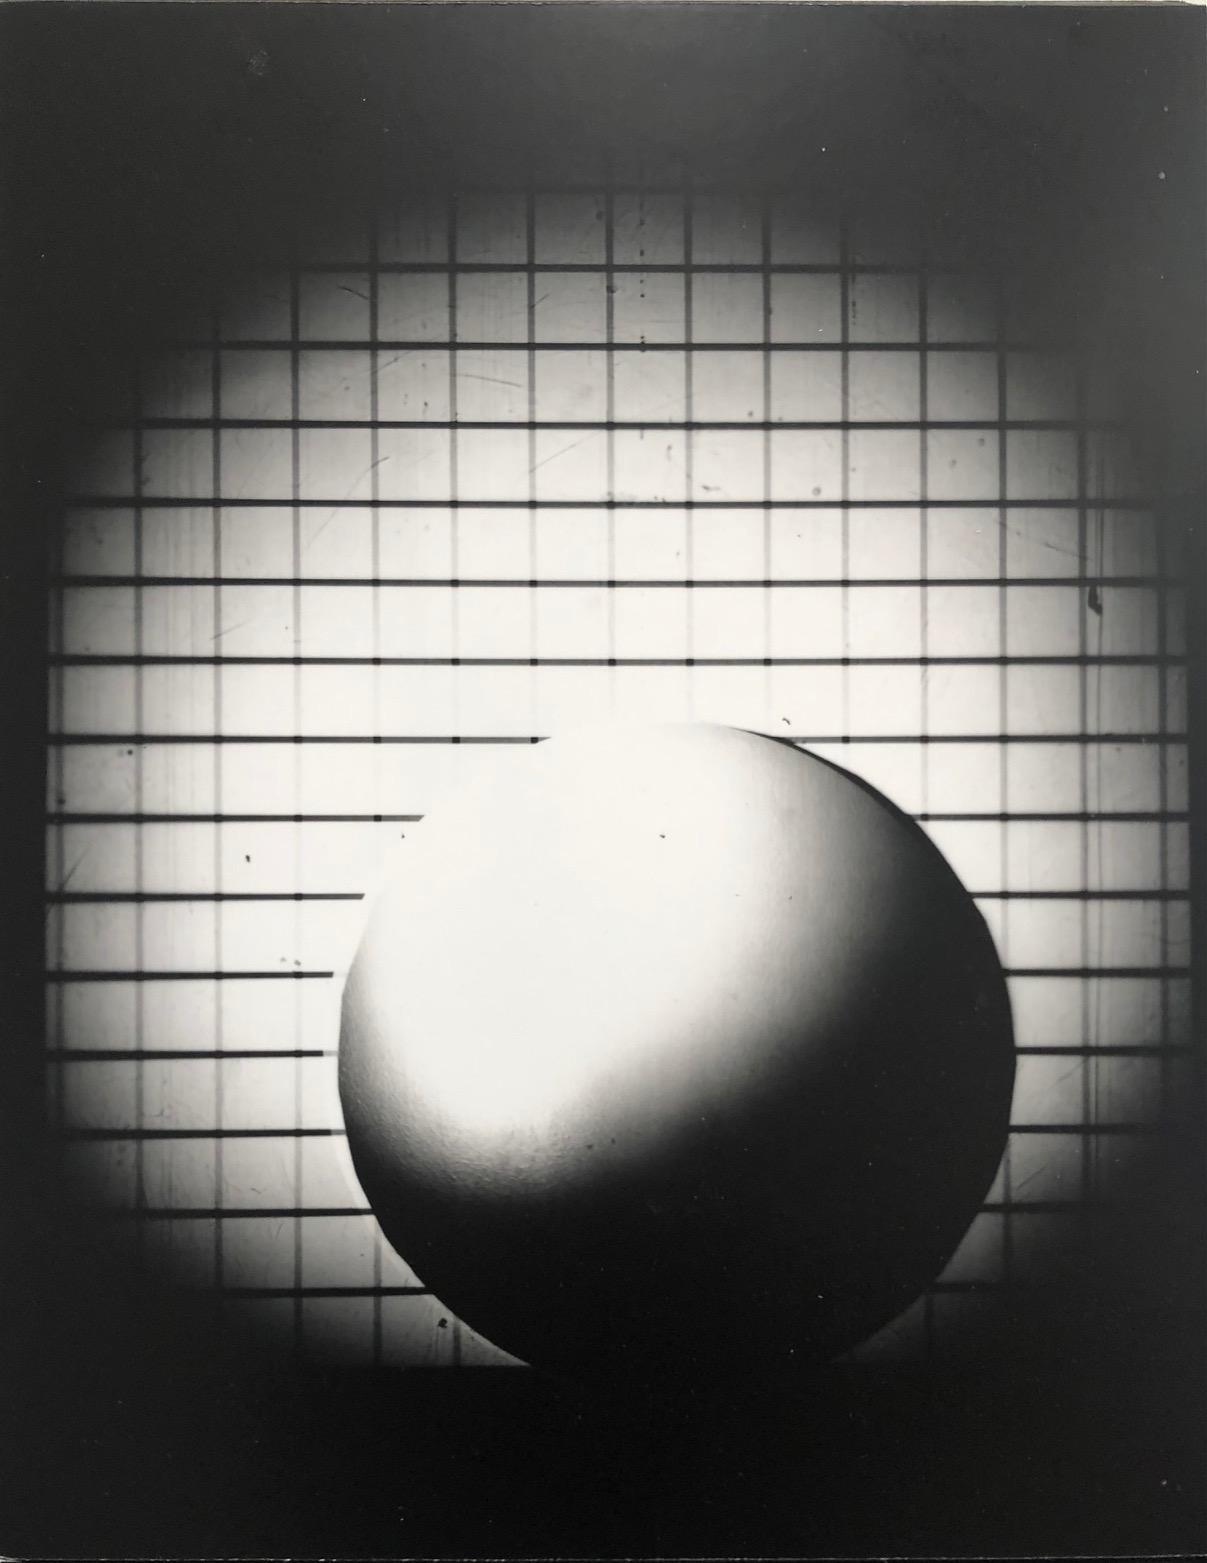 Juan Fernandez, Sphere 3 (Positive), 2022, Laminated silver gelatin print mounted on masonite, 14” x 11” x 1”